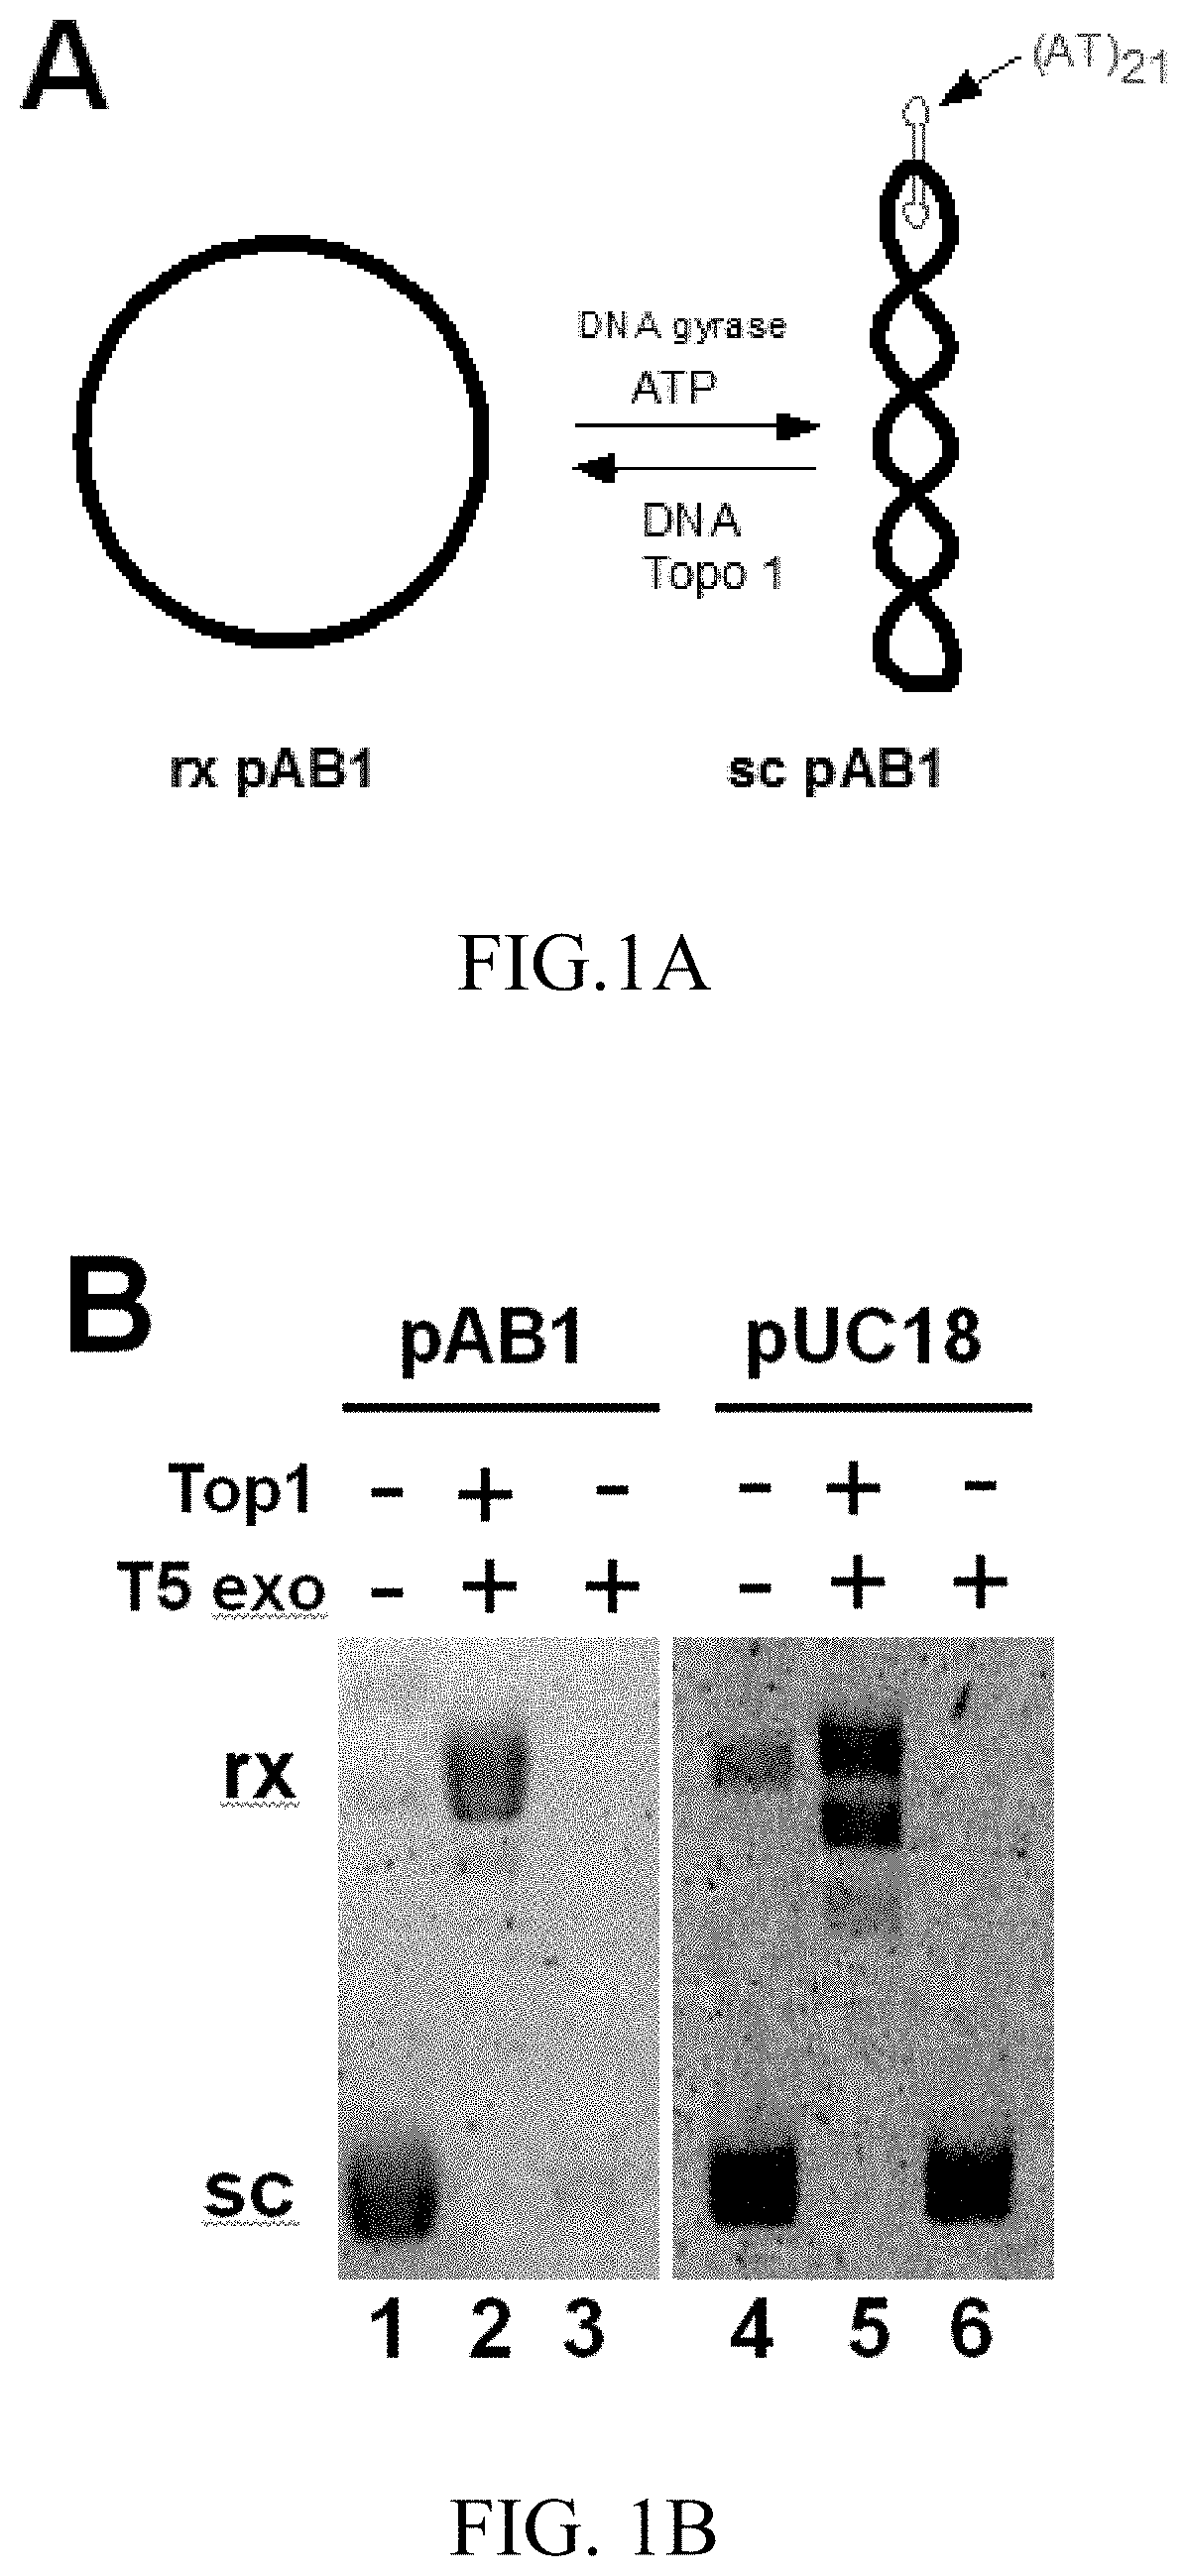 T5 exonuclease-based method to identify DNA topoisomerase inhibitors